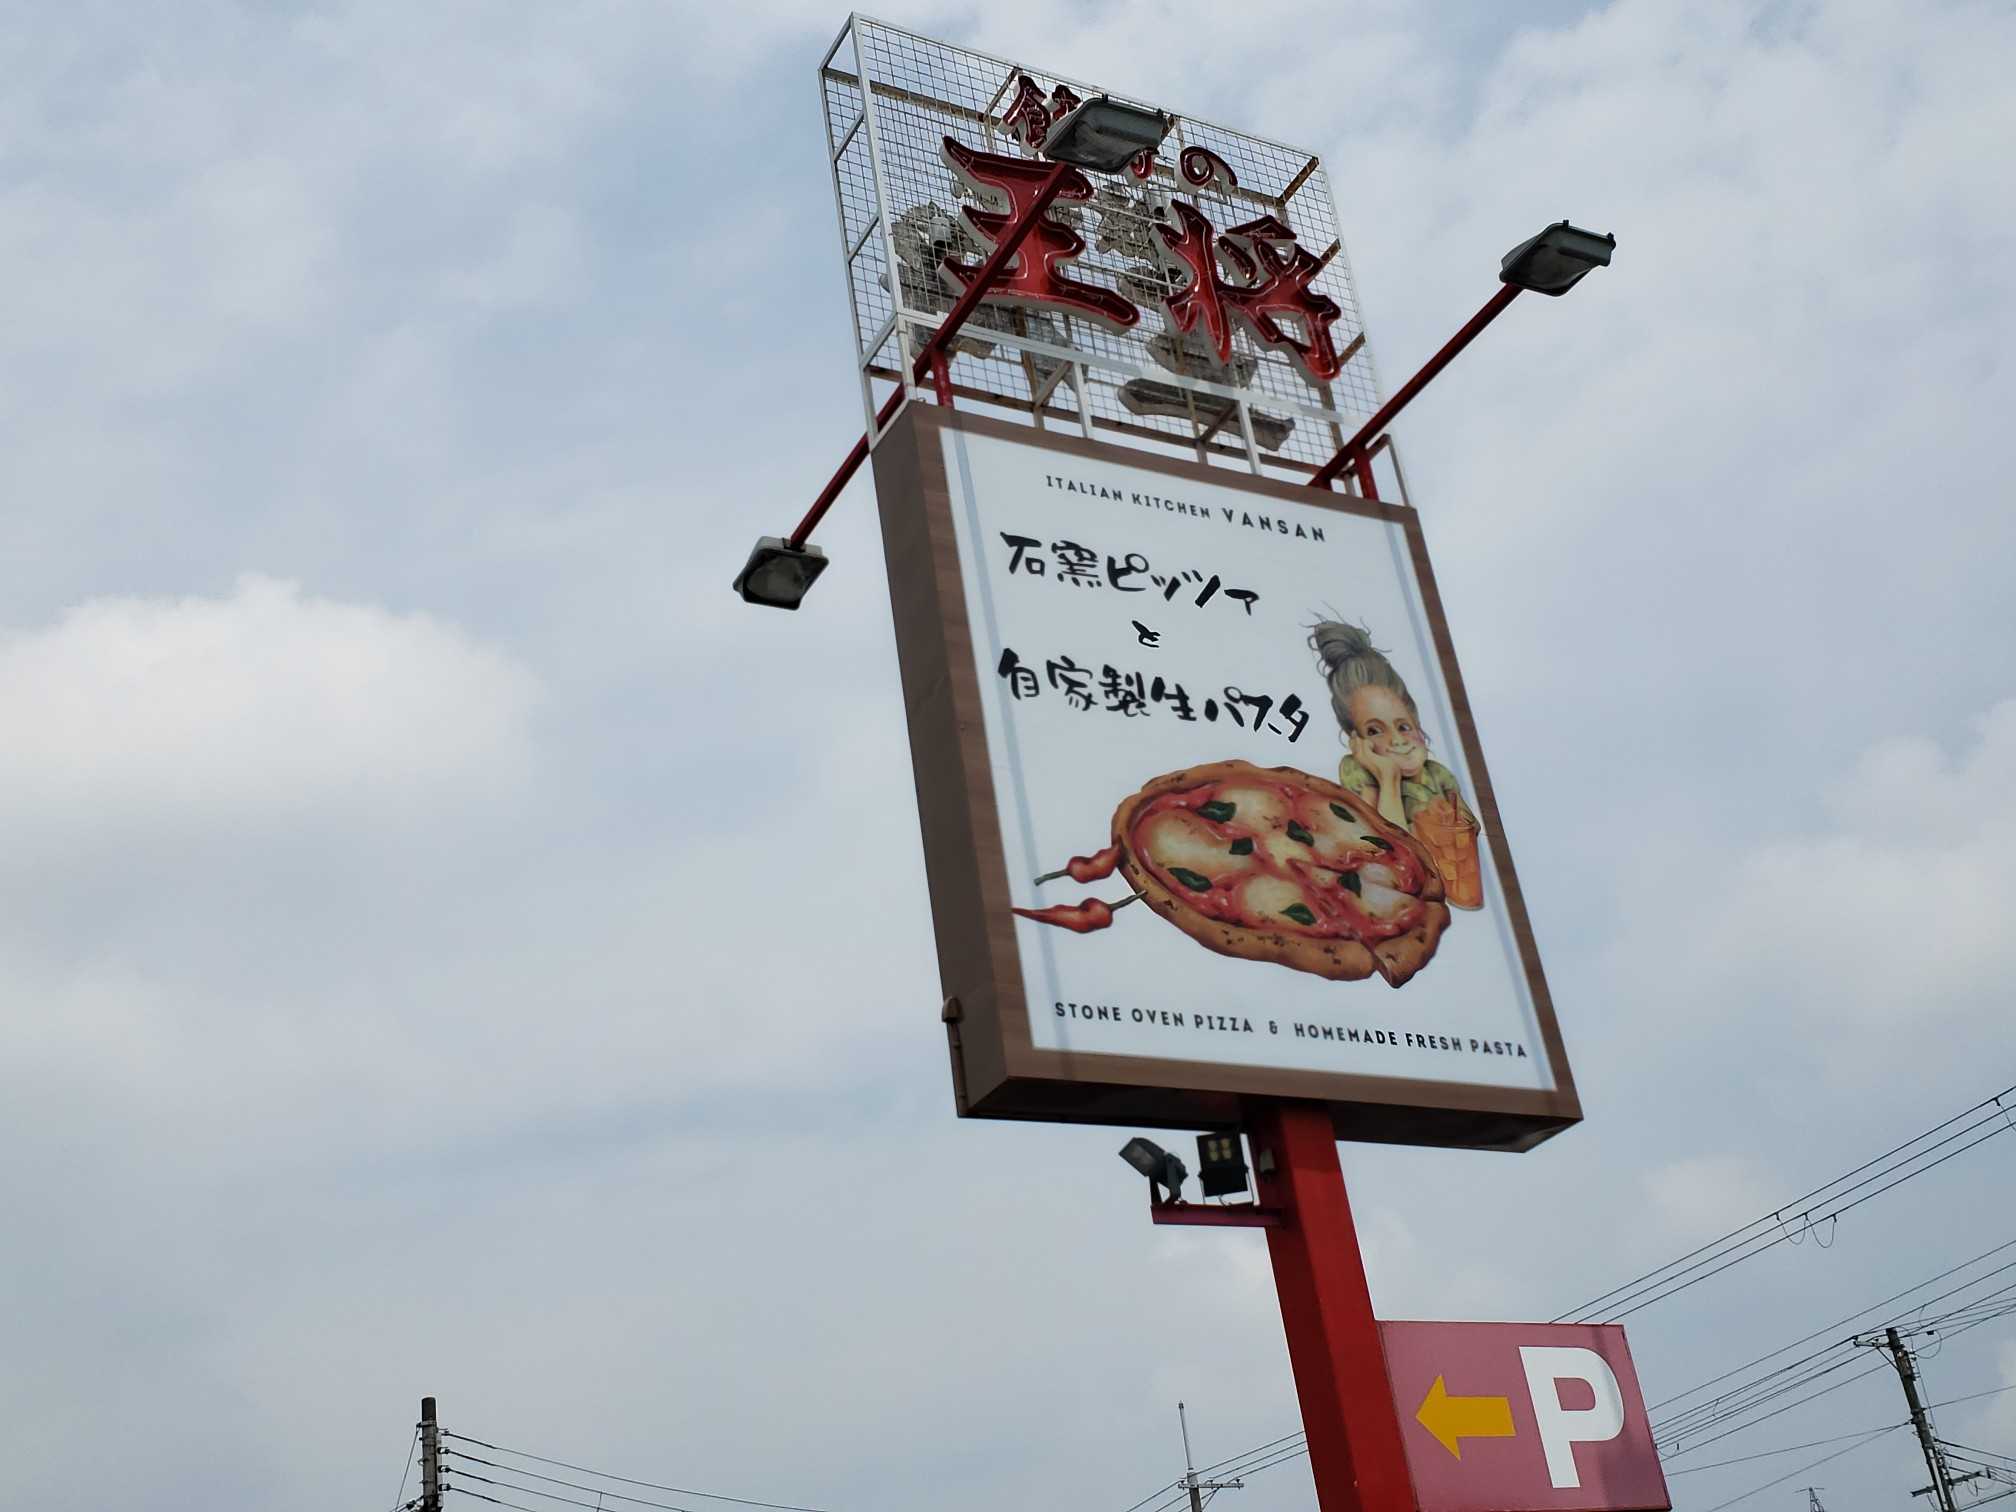 Italian Kitchen Vansan 姫路中地店 兵庫県姫路市中地 播磨のランチ スイーツも守備範囲 楽天ブログ